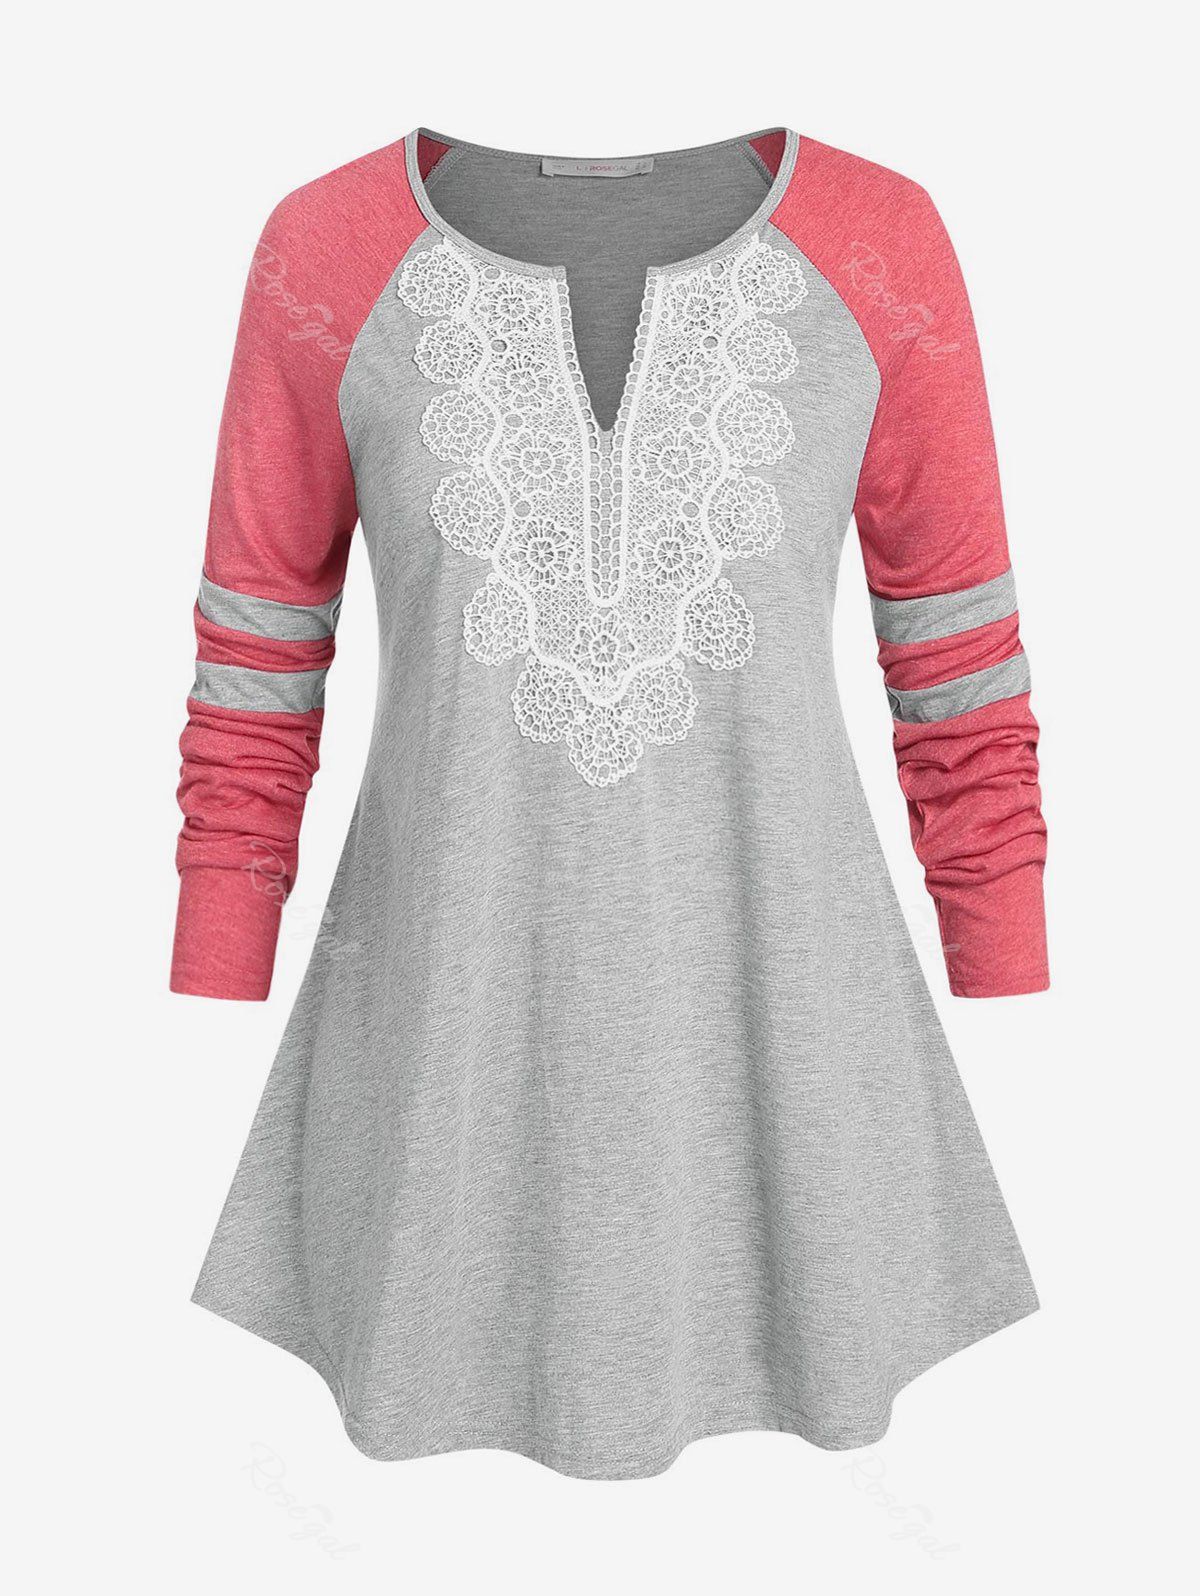 New Plus Size Lace Raglan Sleeve Colorblock T Shirt  